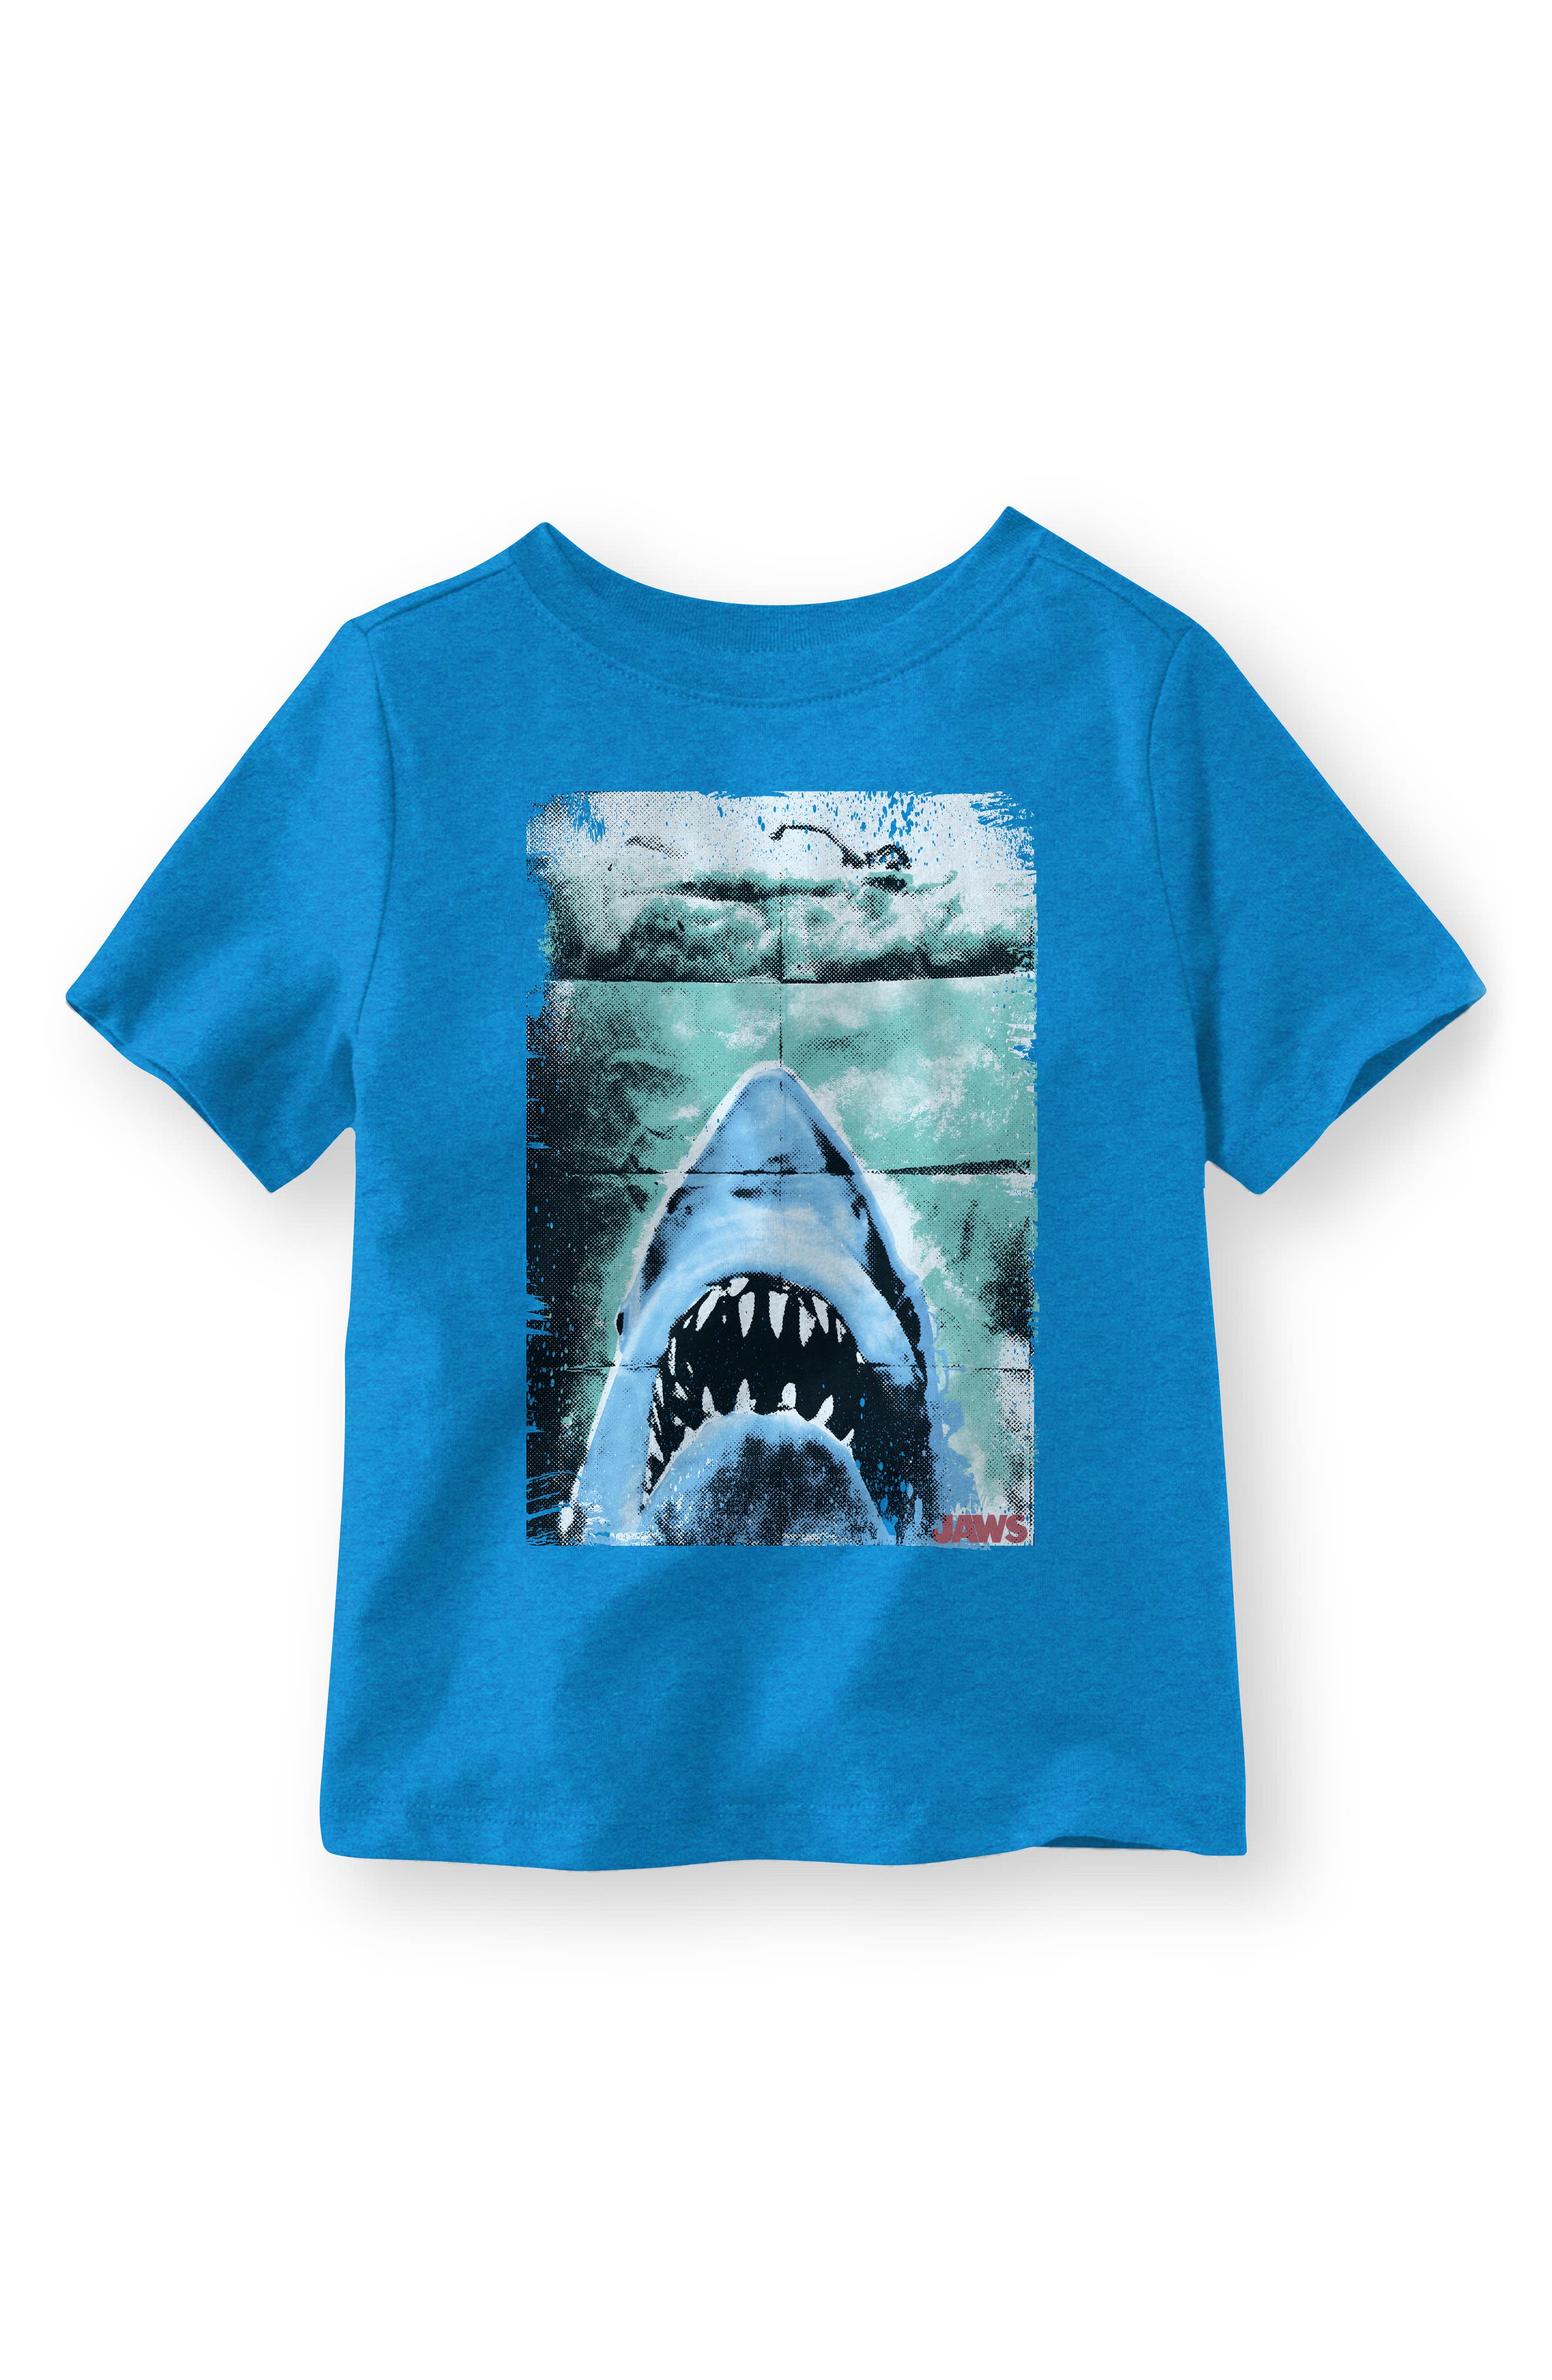 Хлопковая футболка с рисунком Jaws в стиле гранж JEM